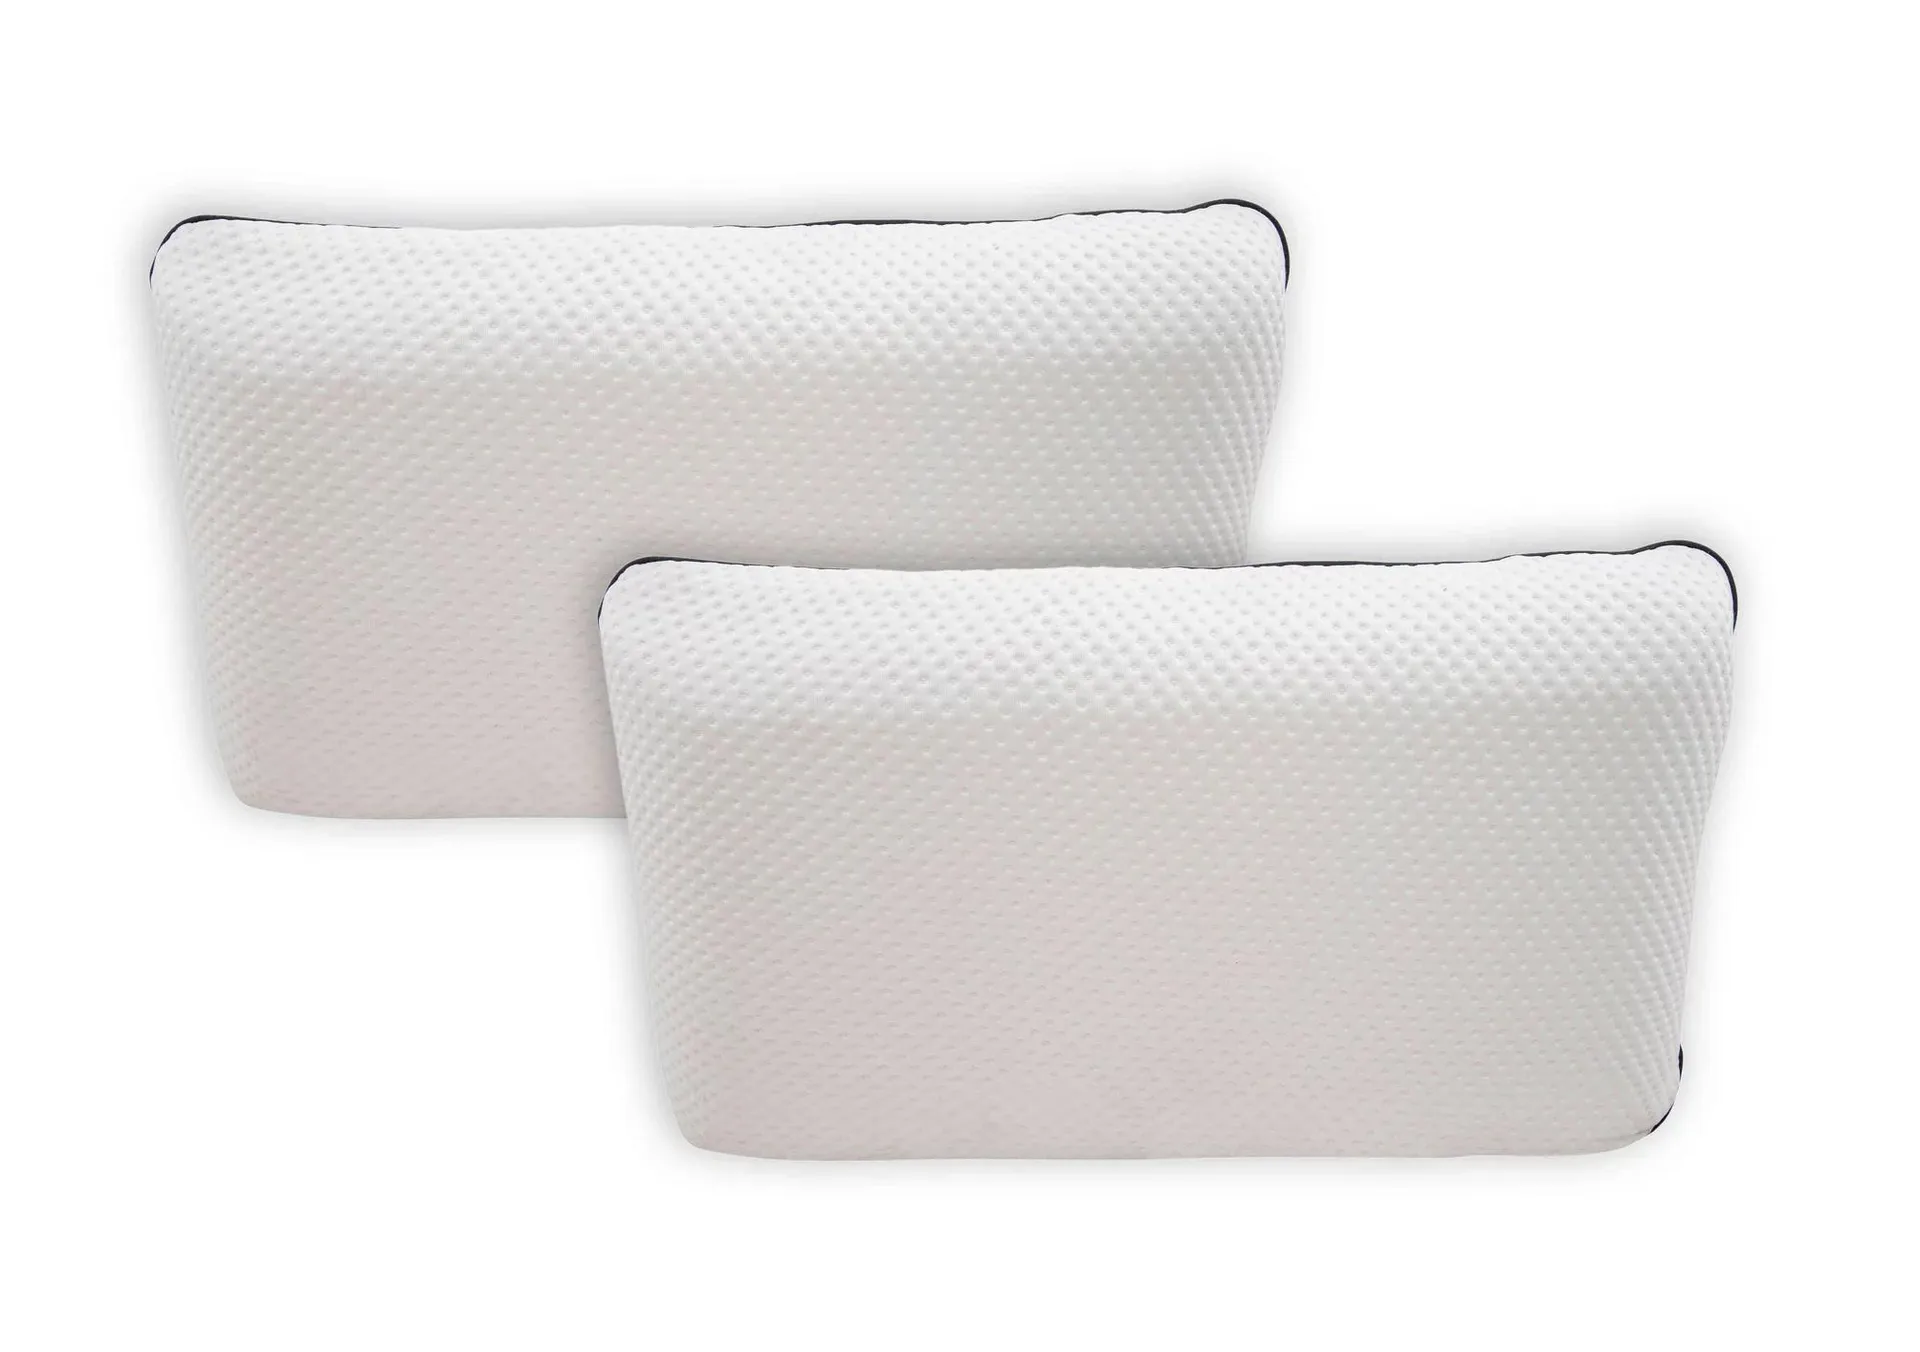 Pair of Select Pillows